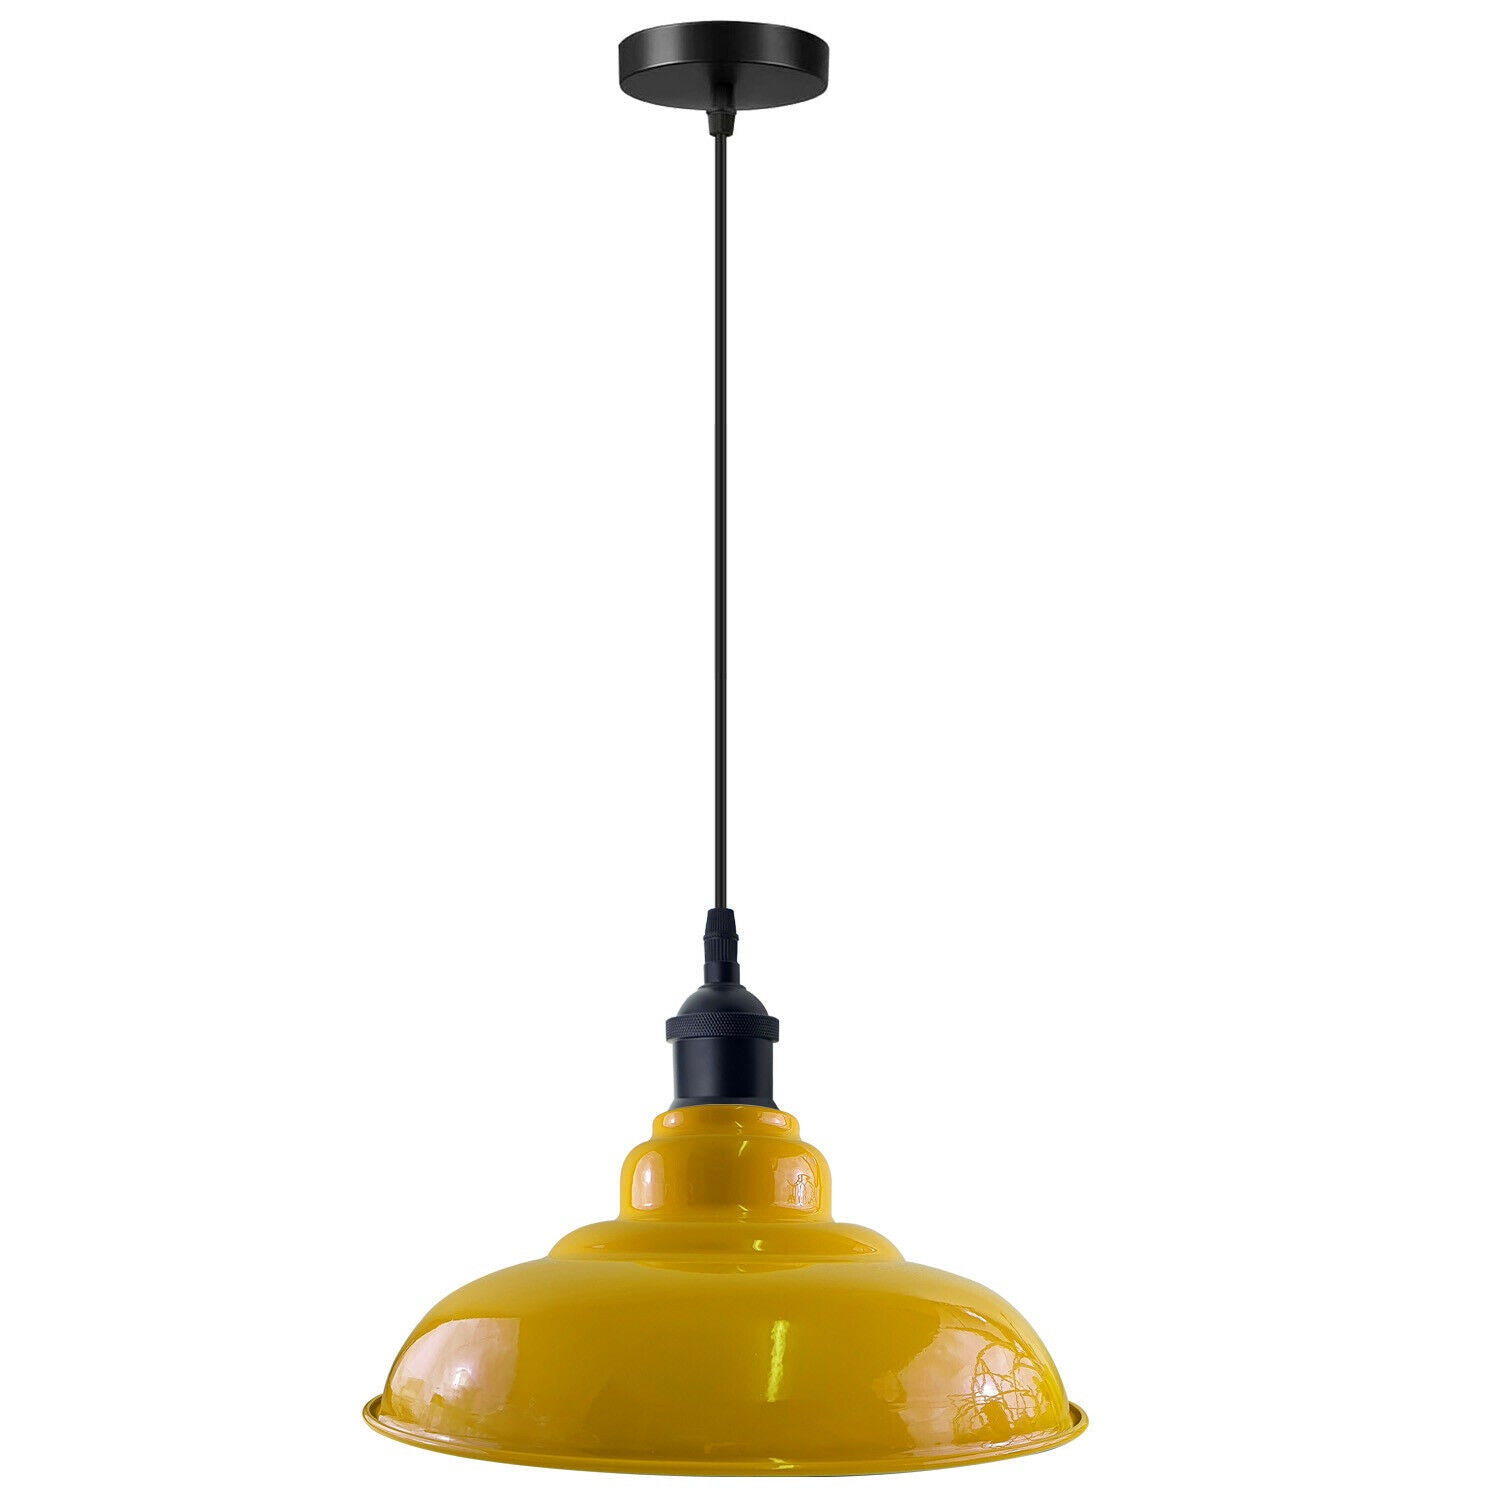 LEDSone industrial Vintage  32cm  Yellow Pendant Retro Metal Lamp Shade E27 Uk Holder~3686 - LEDSone UK Ltd